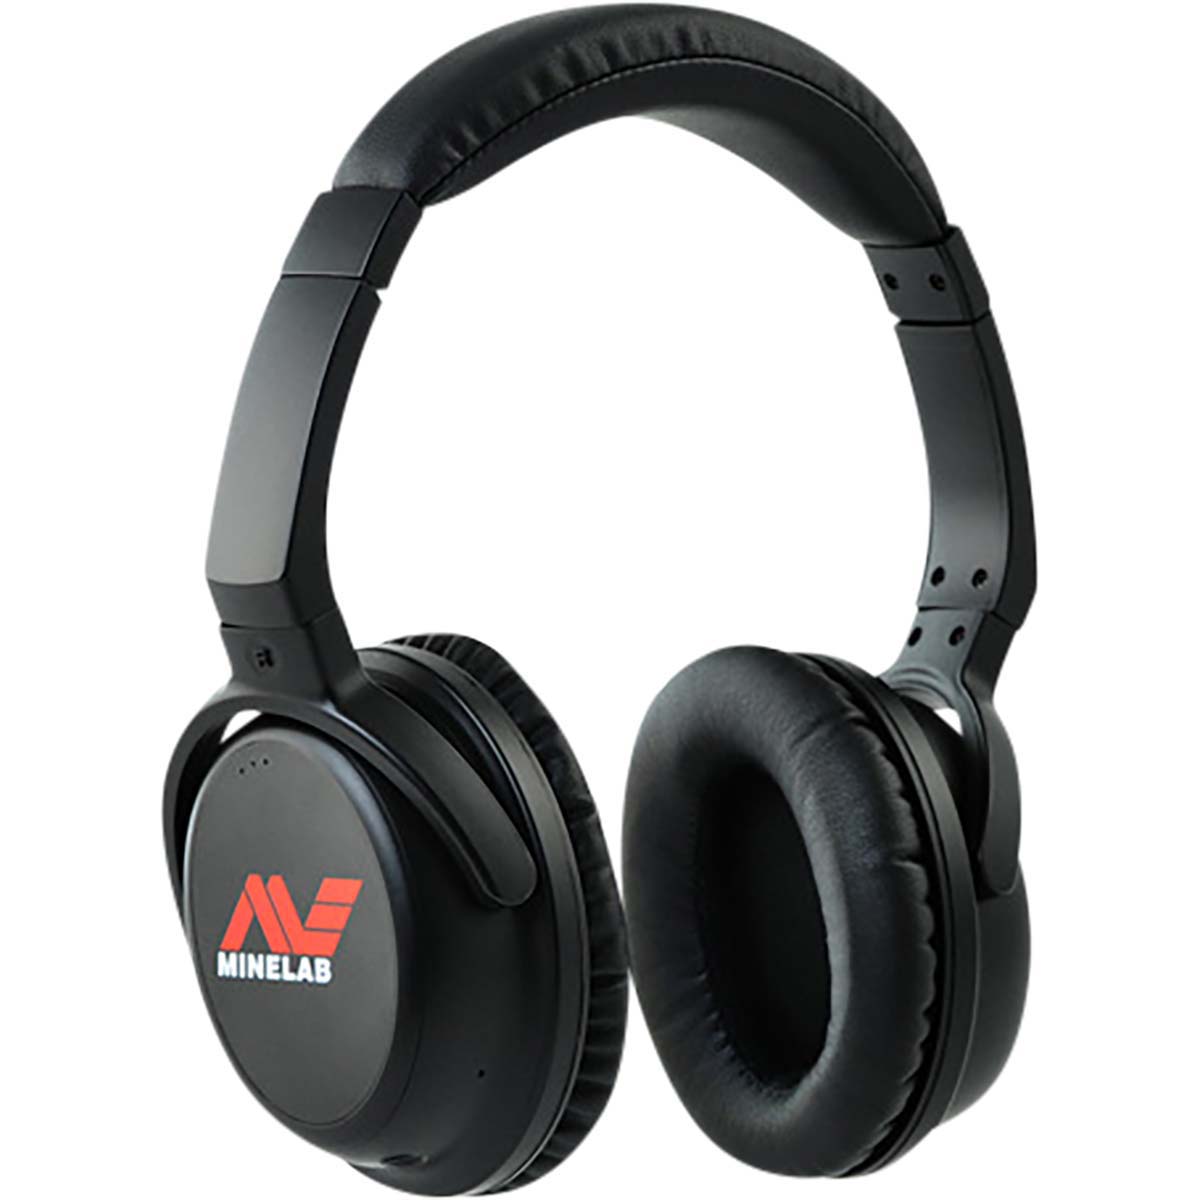 Minelab Bluetooth Headphones for Vanquish 540 and Equinox